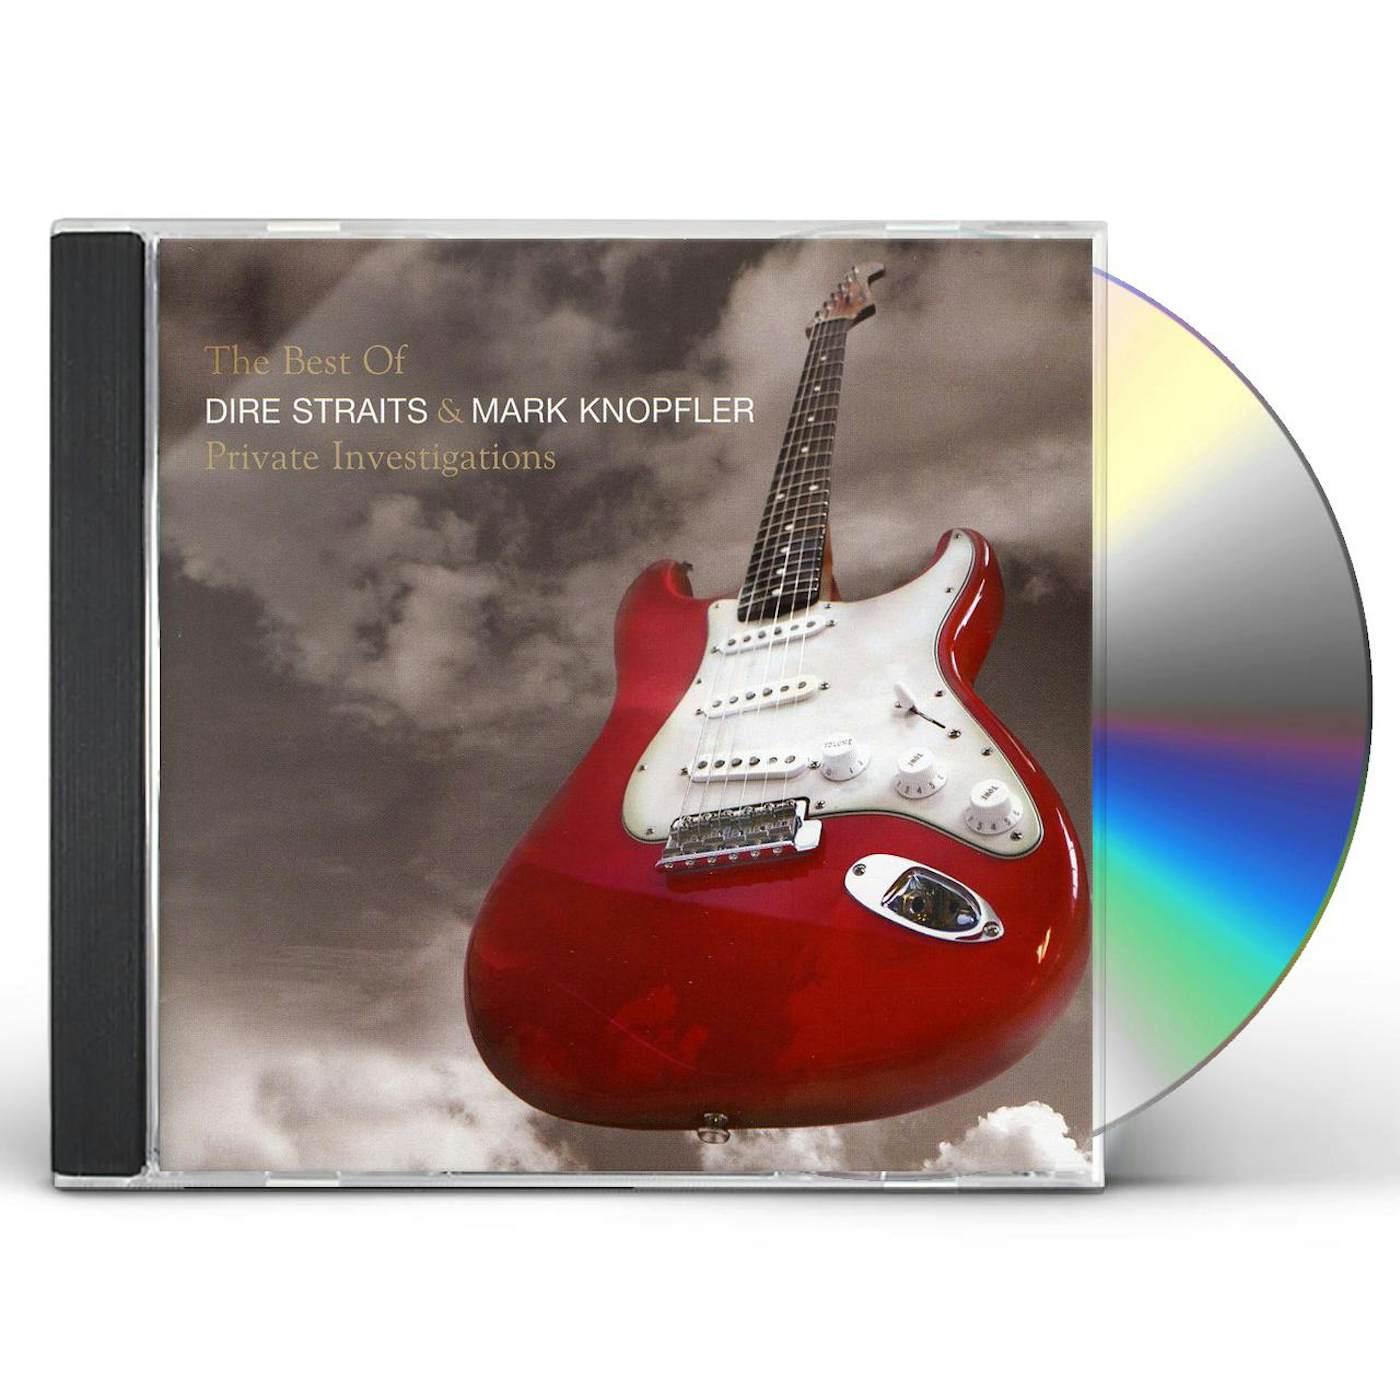 Dire Straits & Mark Knopfler PRIVATE INVESTIGATIONS CD